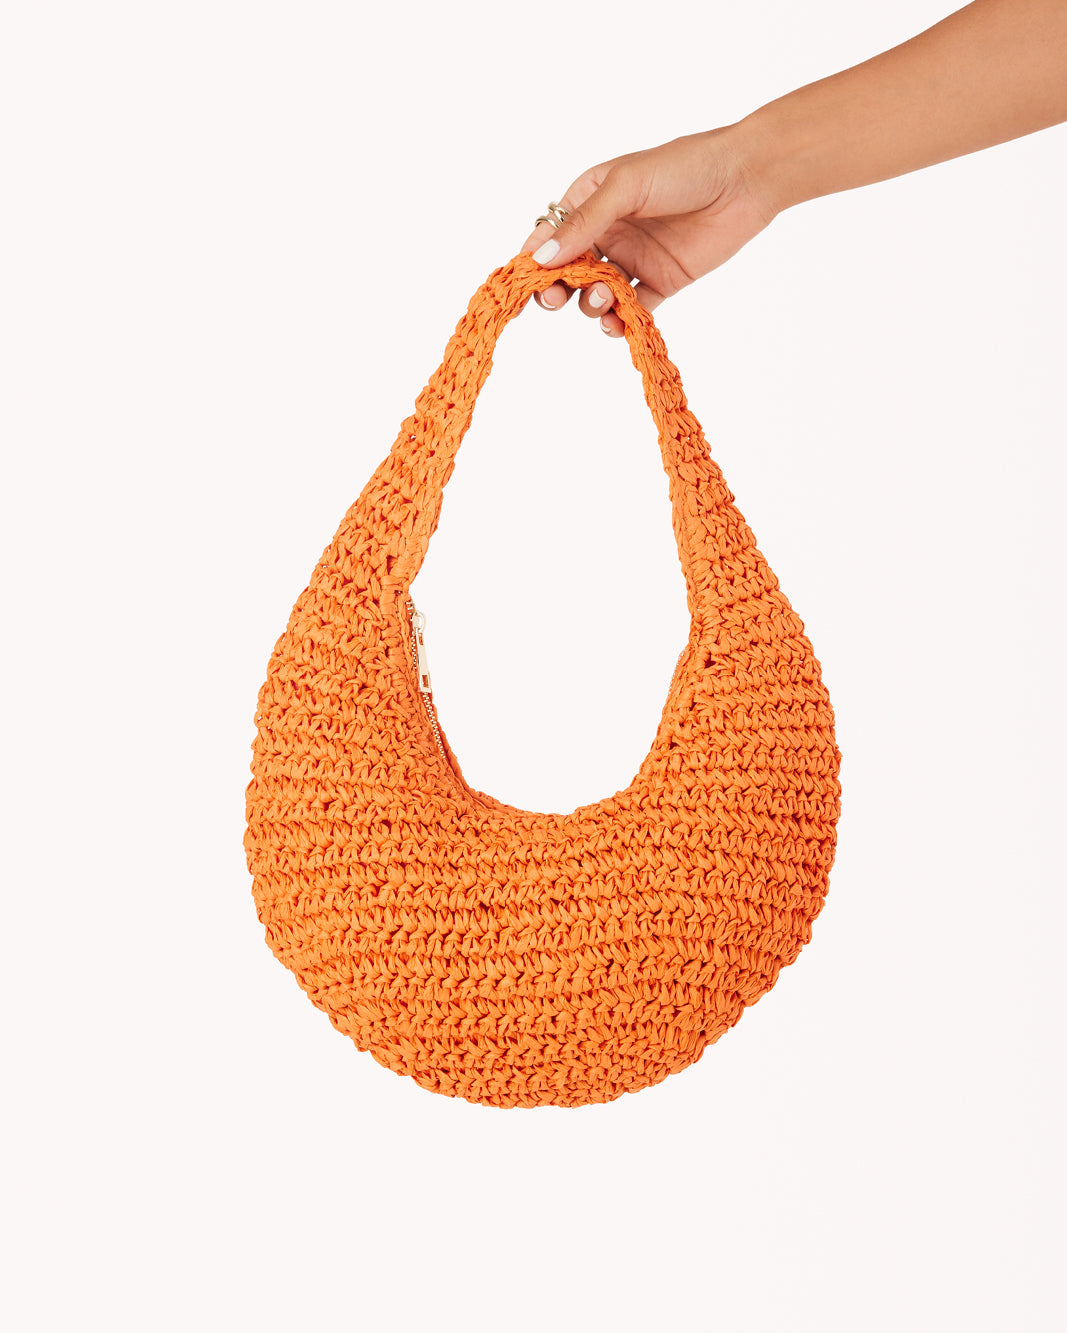 CLEMENTINE HANDLE BAG - TANGERINE RAFFIA-Handbags-Billini-O/S-Billini